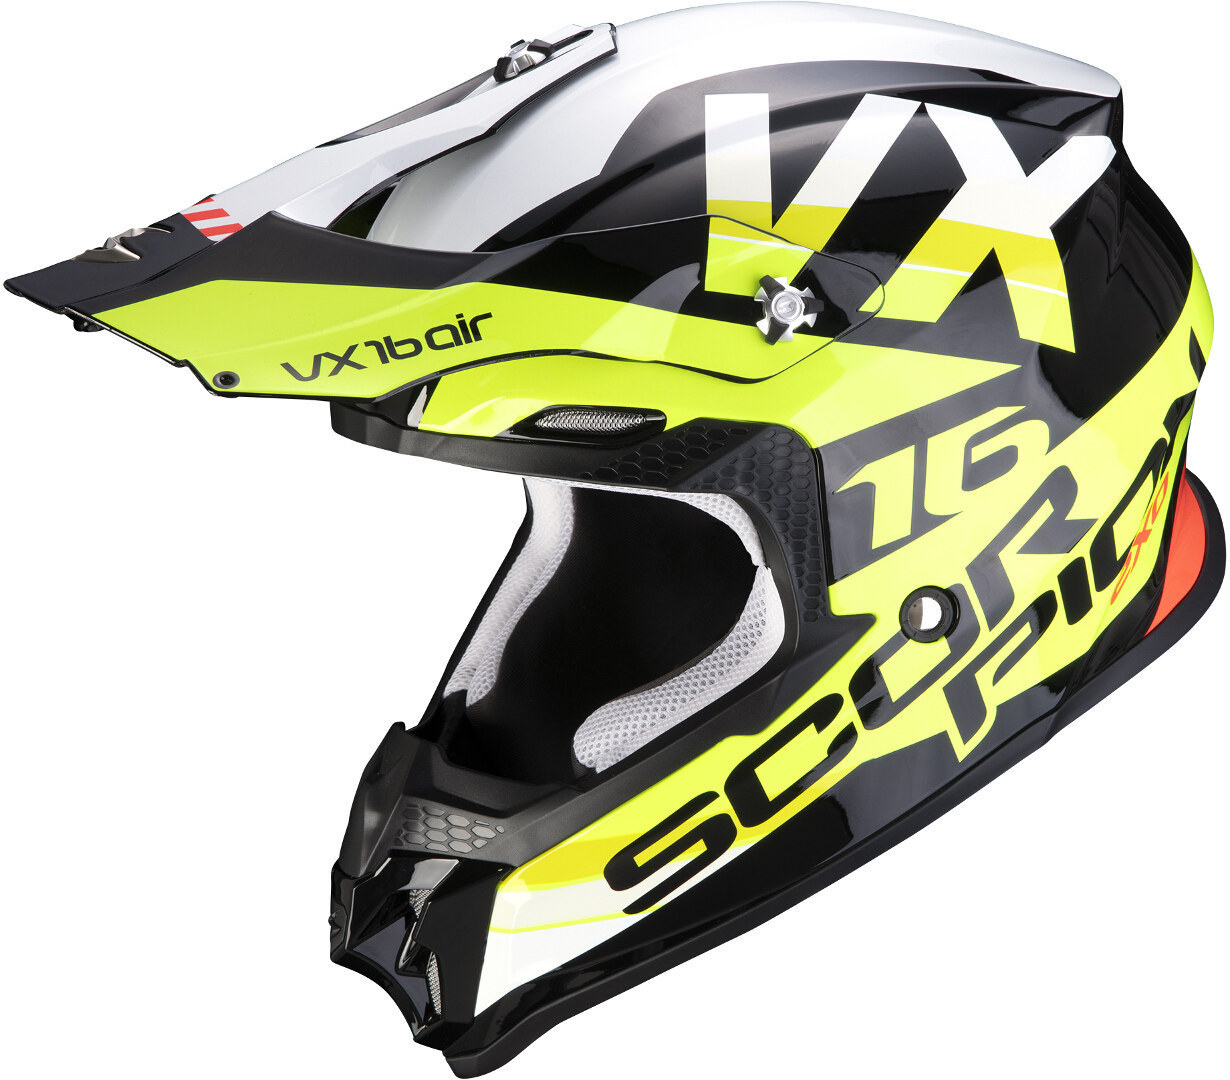 Scorpion VX-16 Air X-Turn Motocross Helm, schwarz-weiss-gelb, Größe S, schwarz-weiss-gelb, Größe S